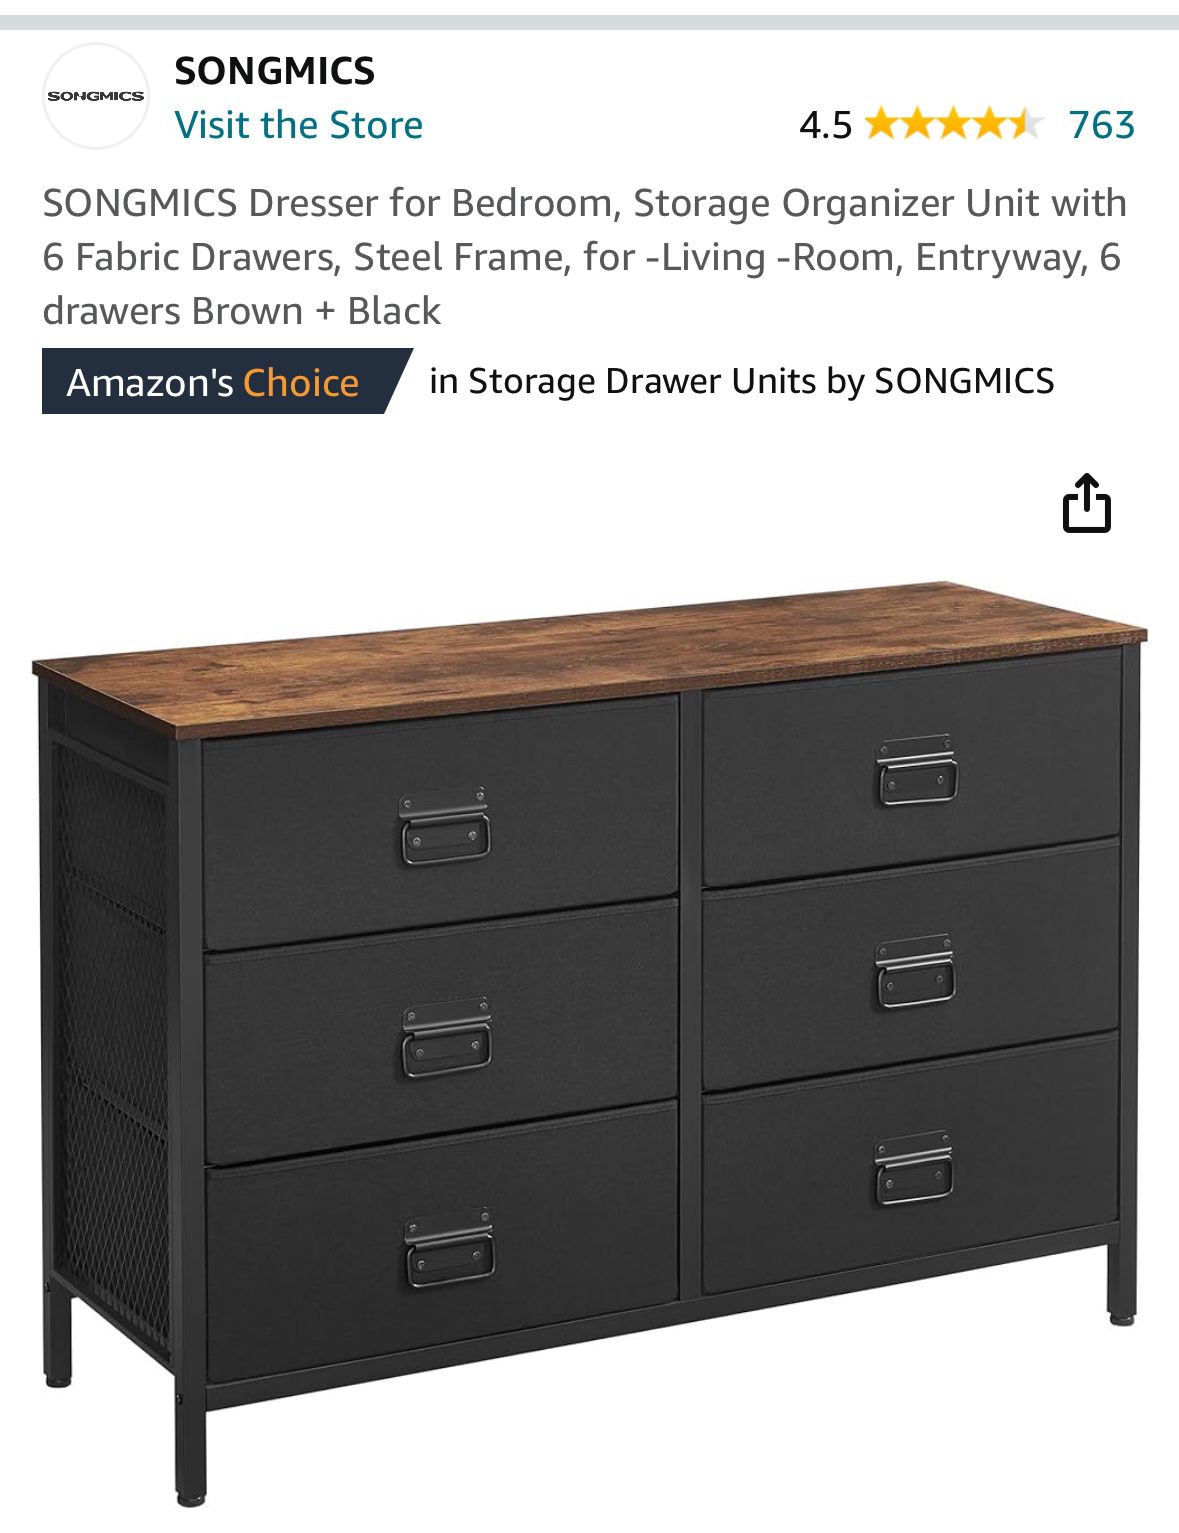 Six Drawer Amazon Dresser